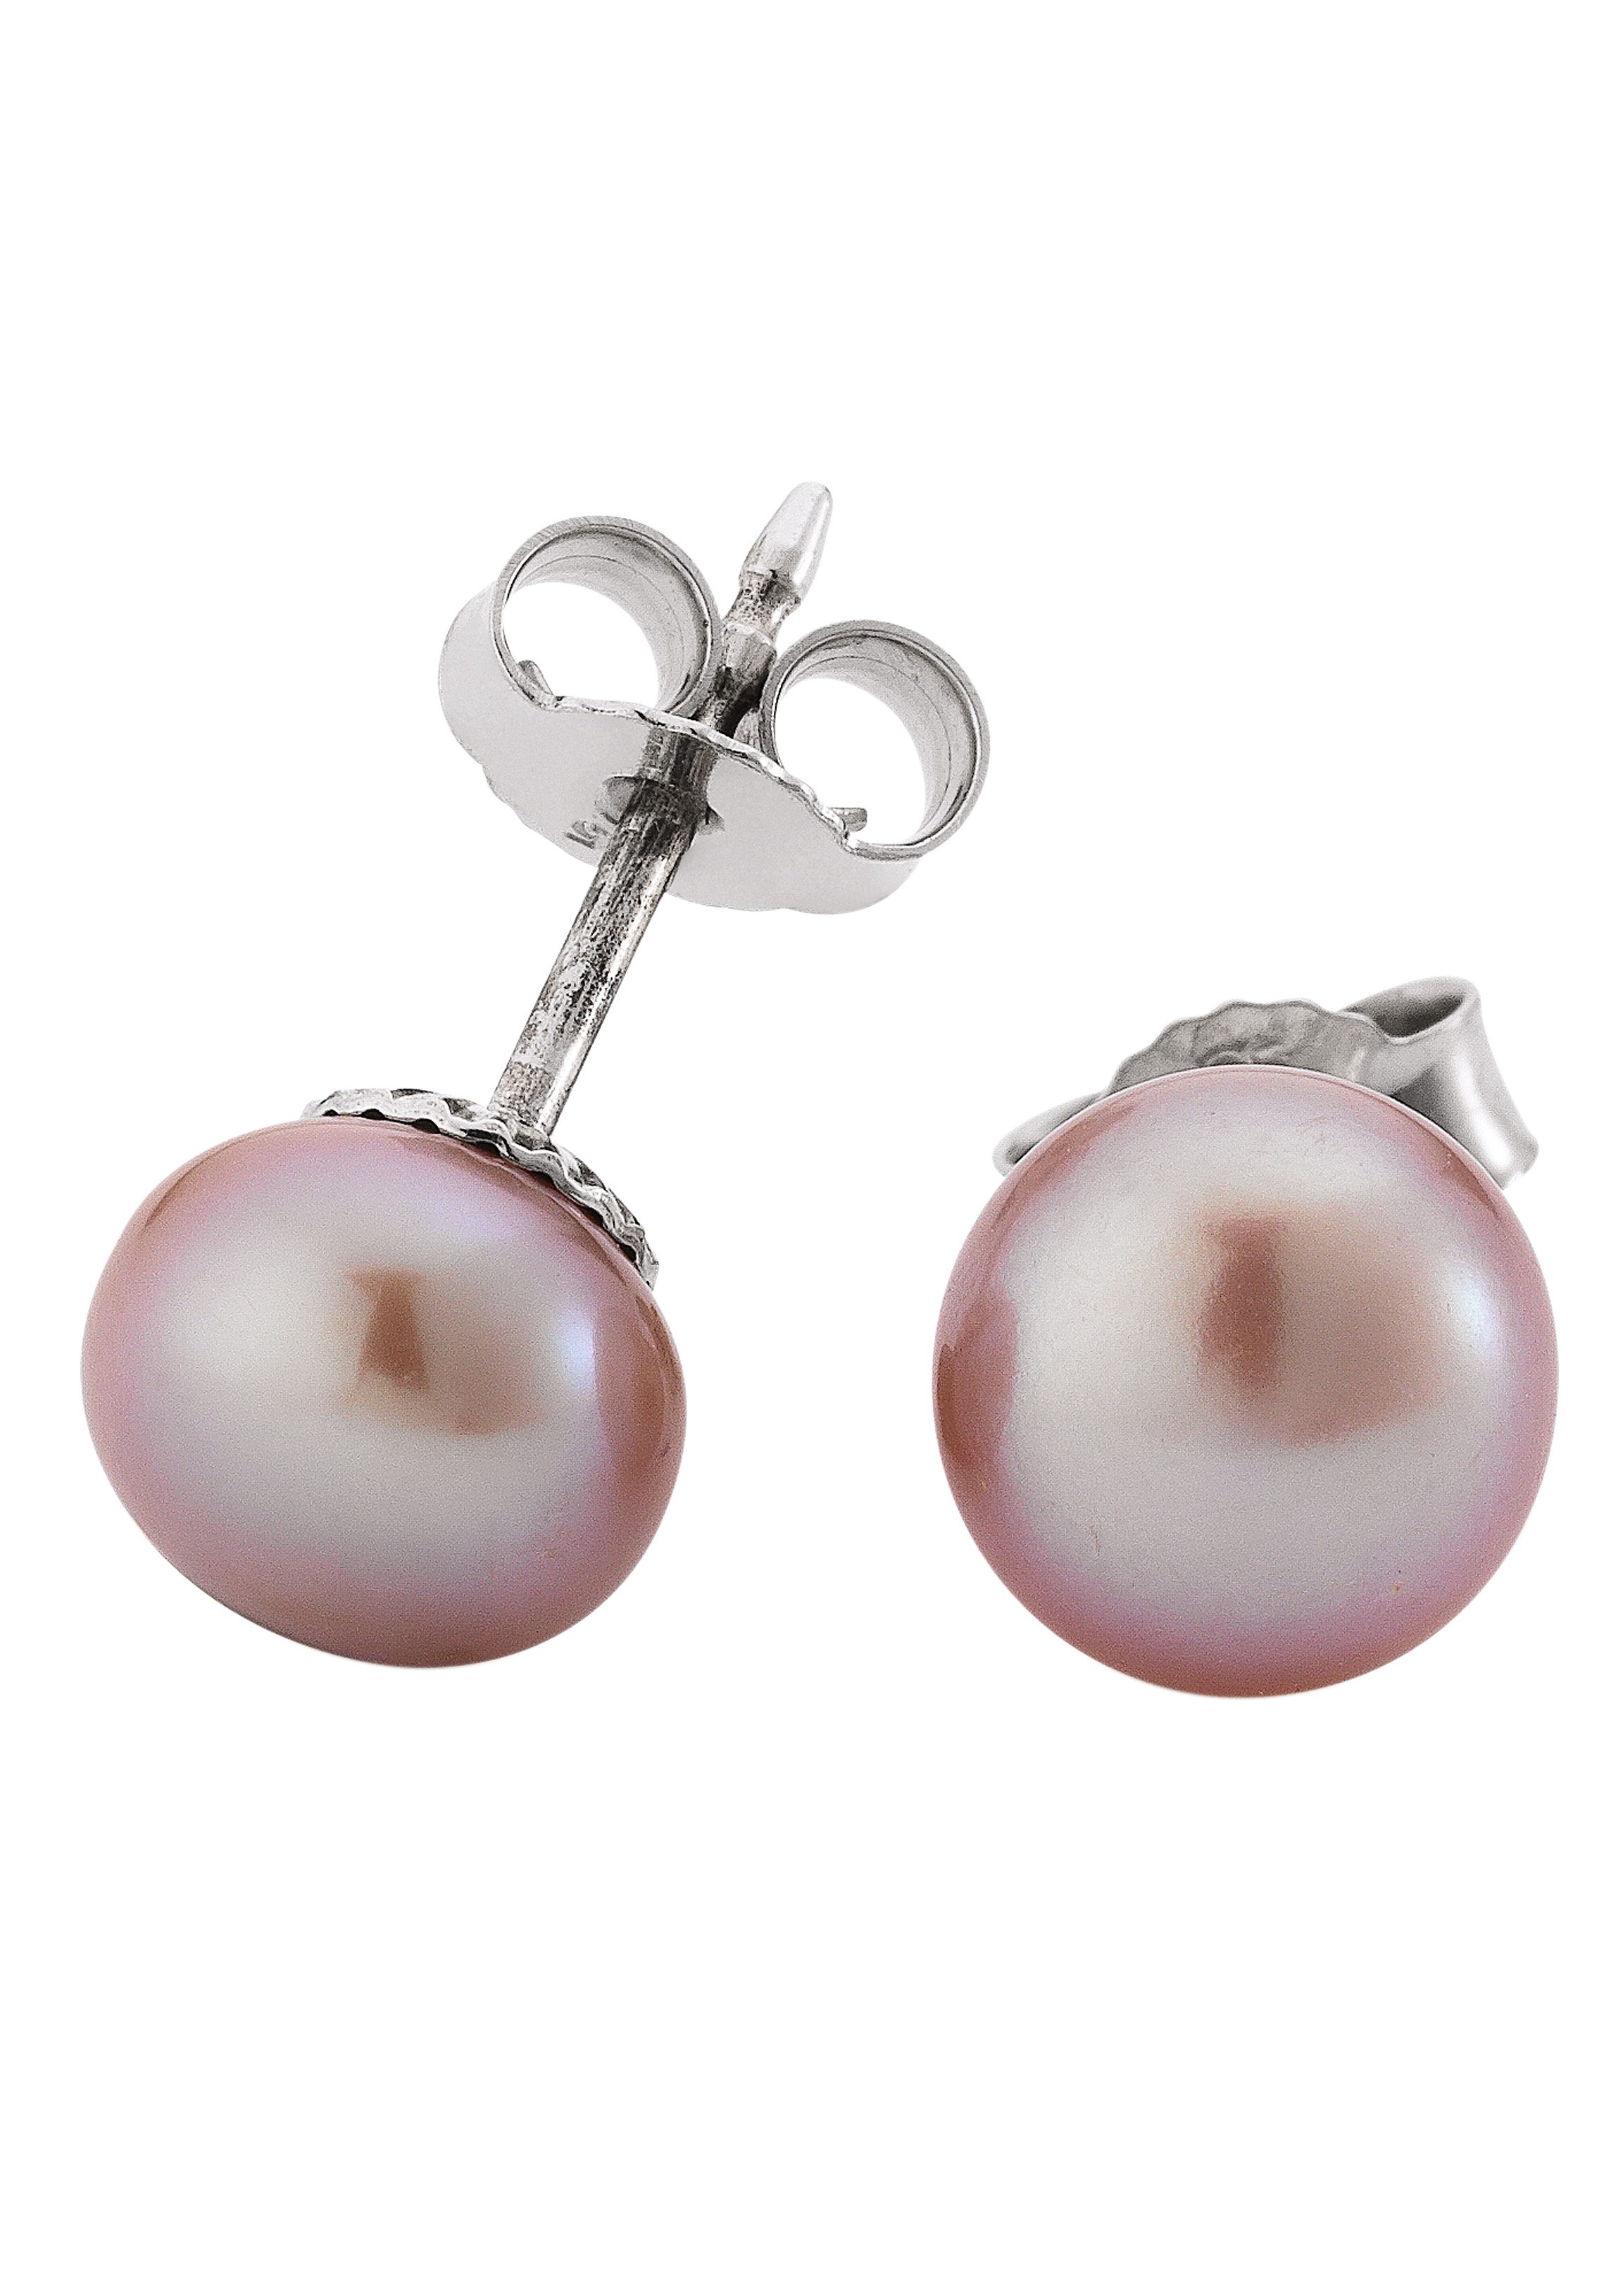 Rosa Perlenohrringe kaufen » Pinker Damen-Perlenohrring | OTTO